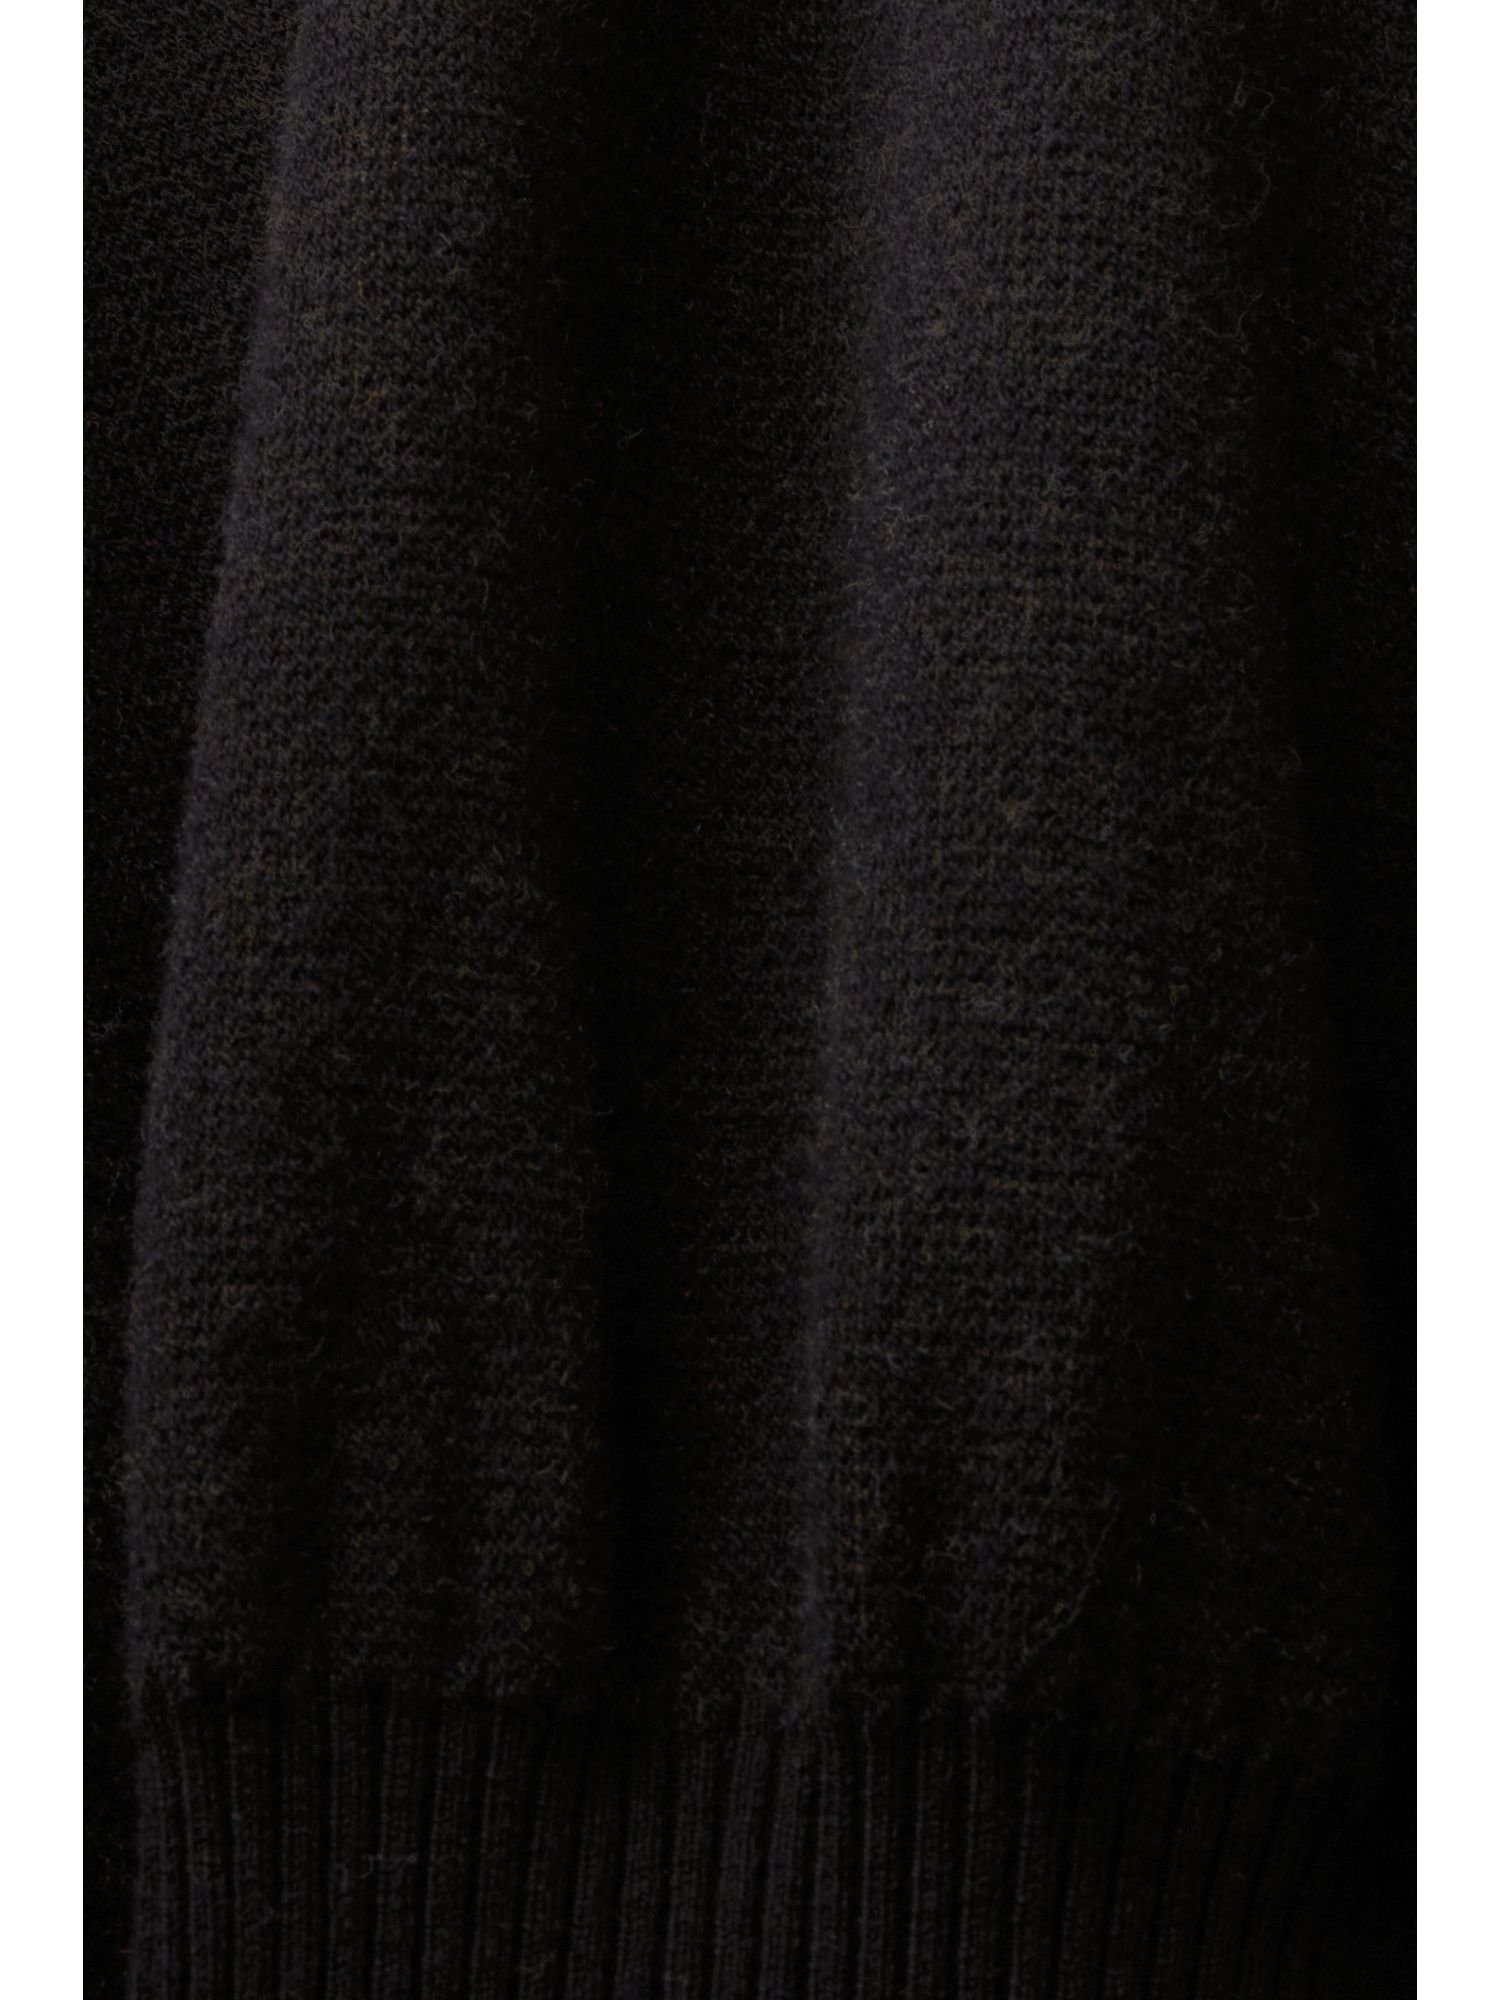 Esprit Minikleid Fit-and-flare-Kleid Jacquard-Muster BLACK floralem mit